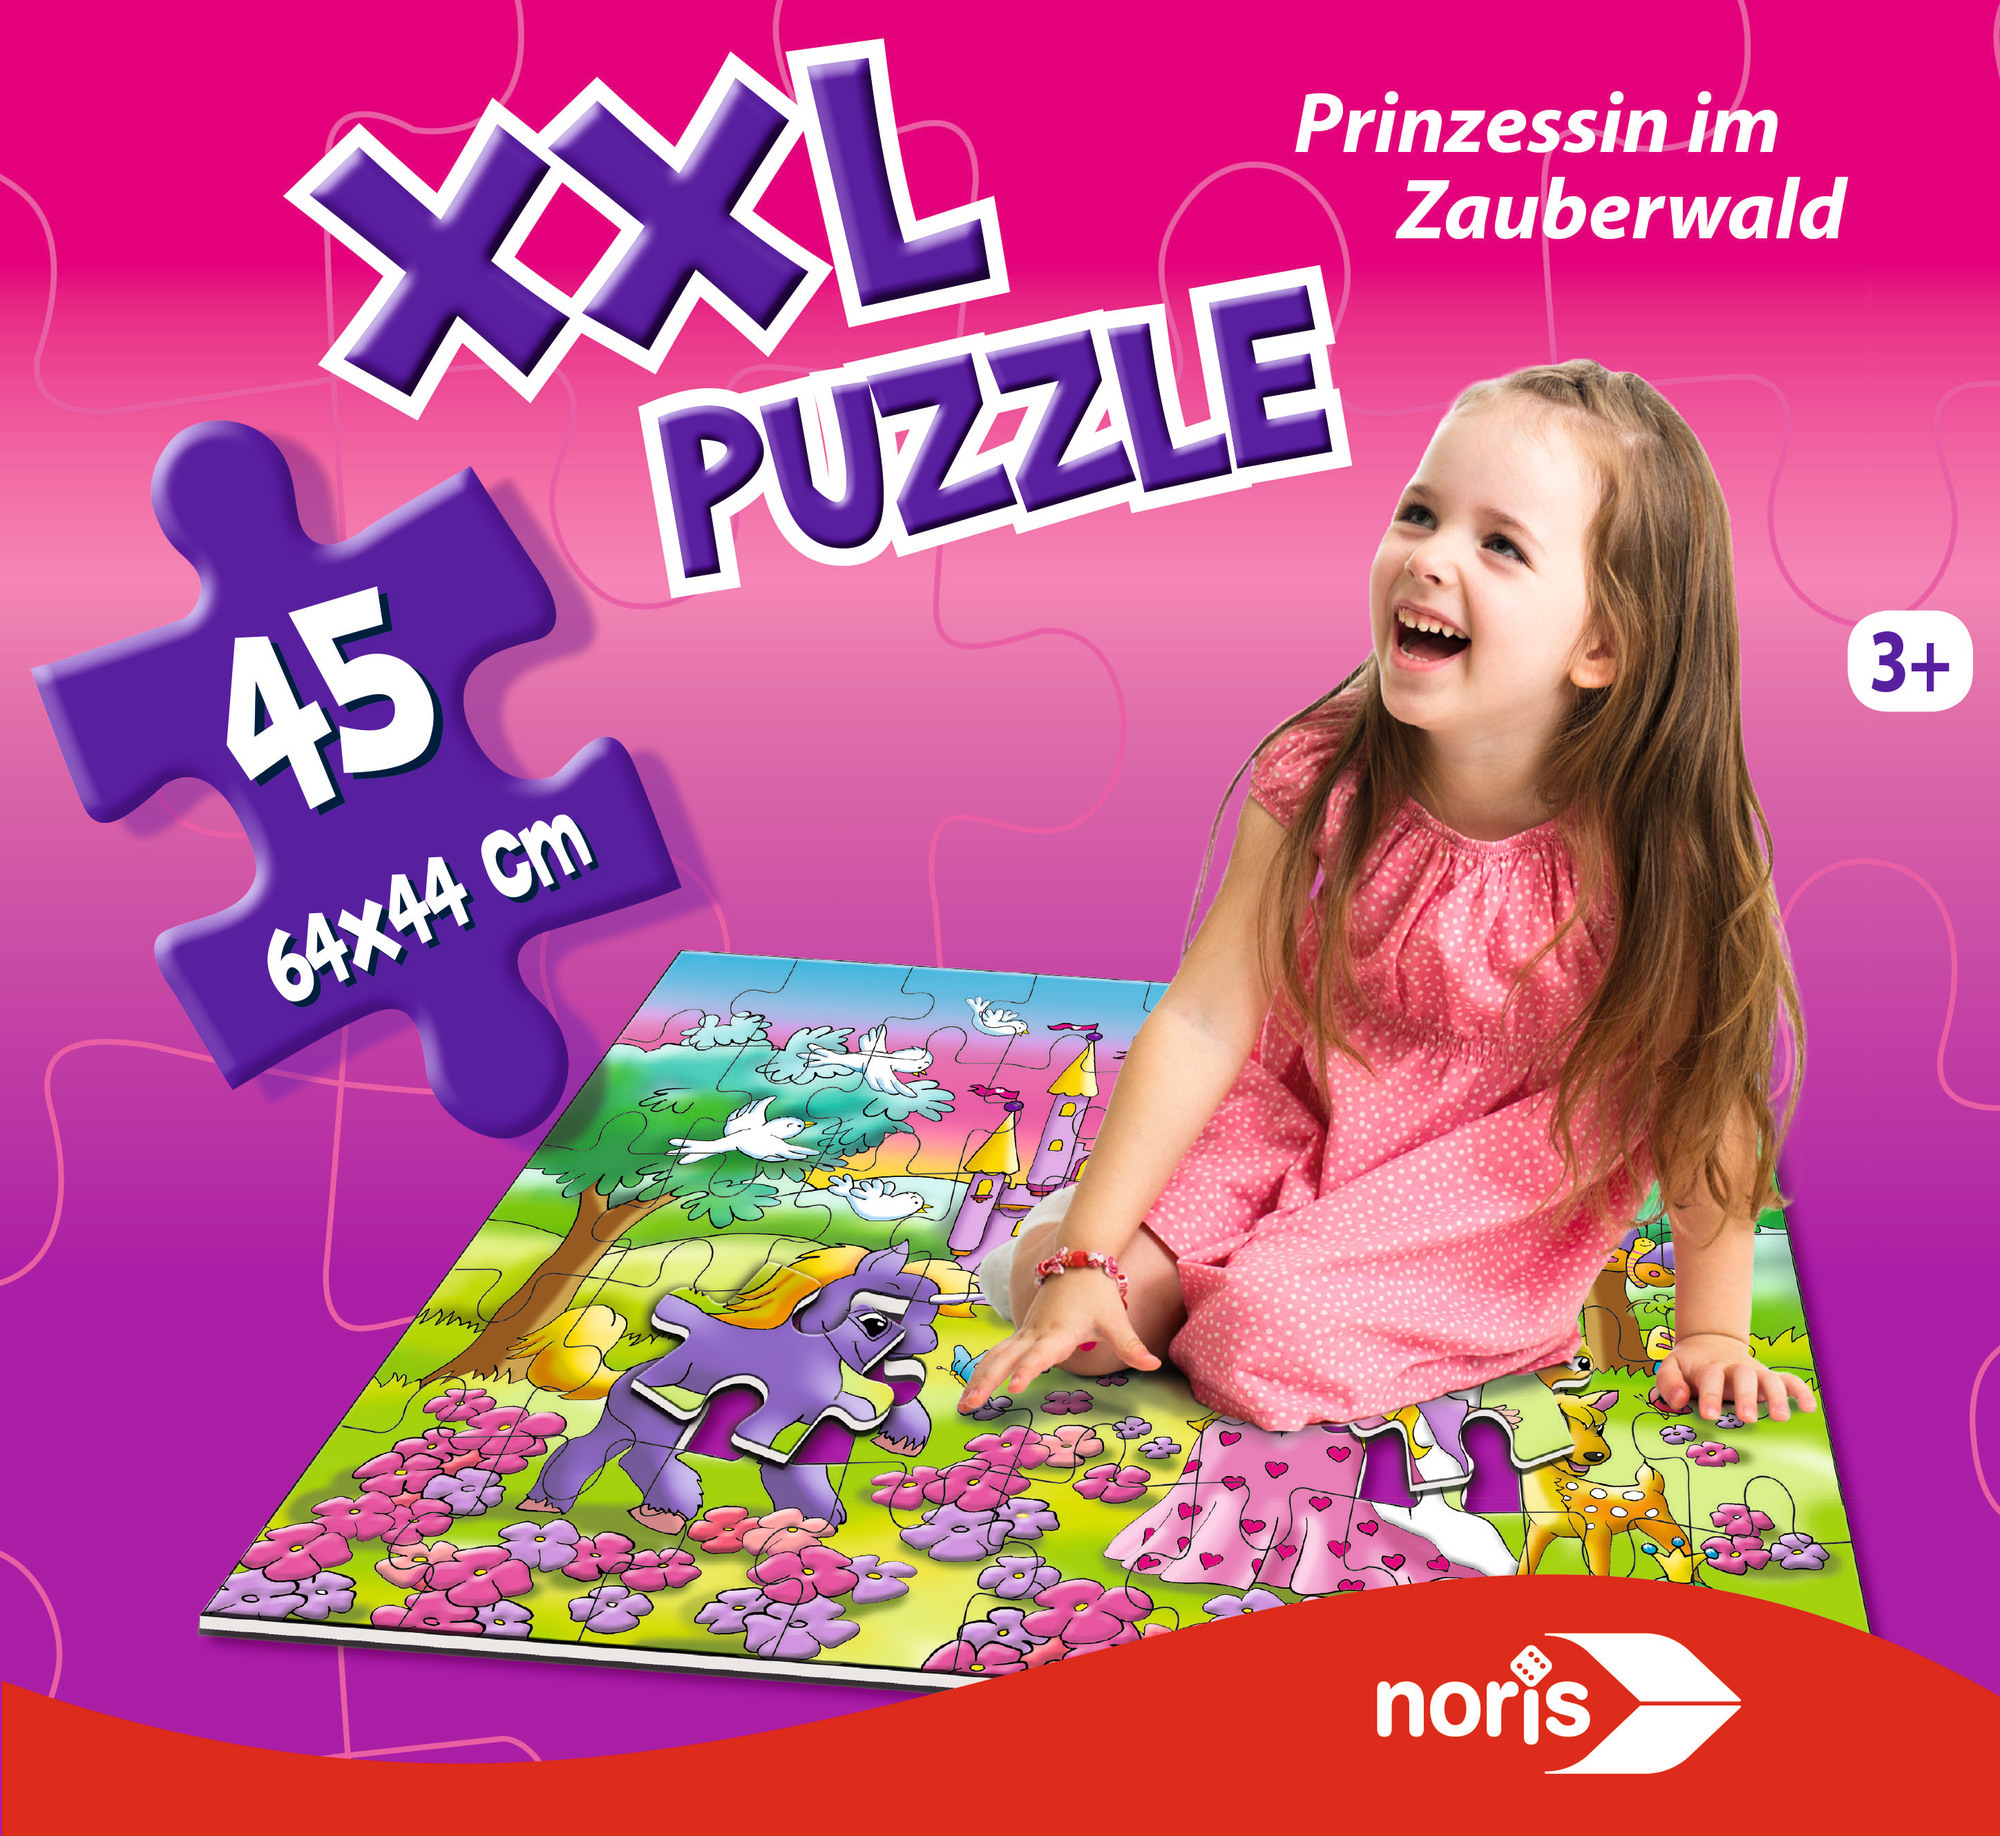 NORIS XXL Puzzle Zauberwald Mehrfarbig Puzzle Prinzessin im